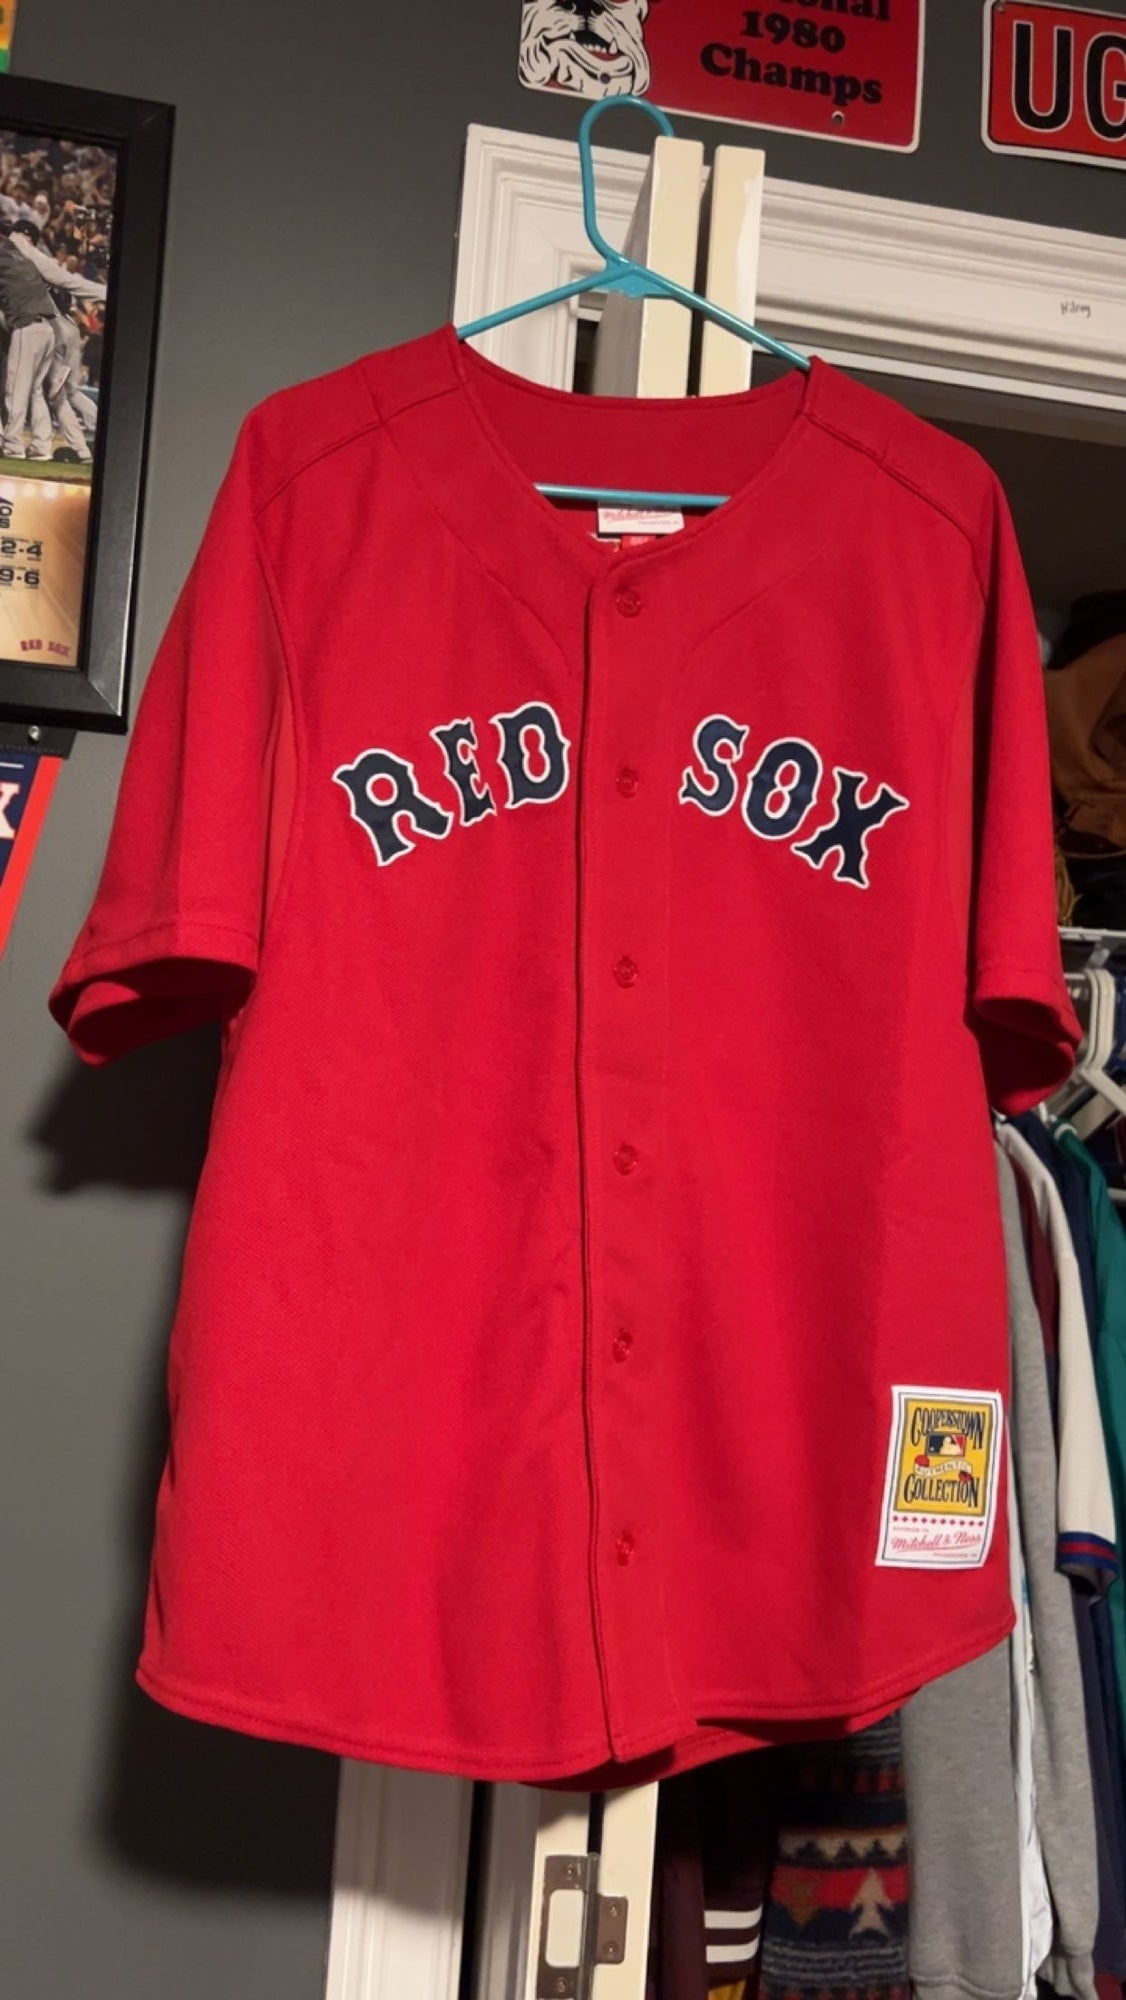 10305-David Ortiz Official Women's Red Sox home Jersey